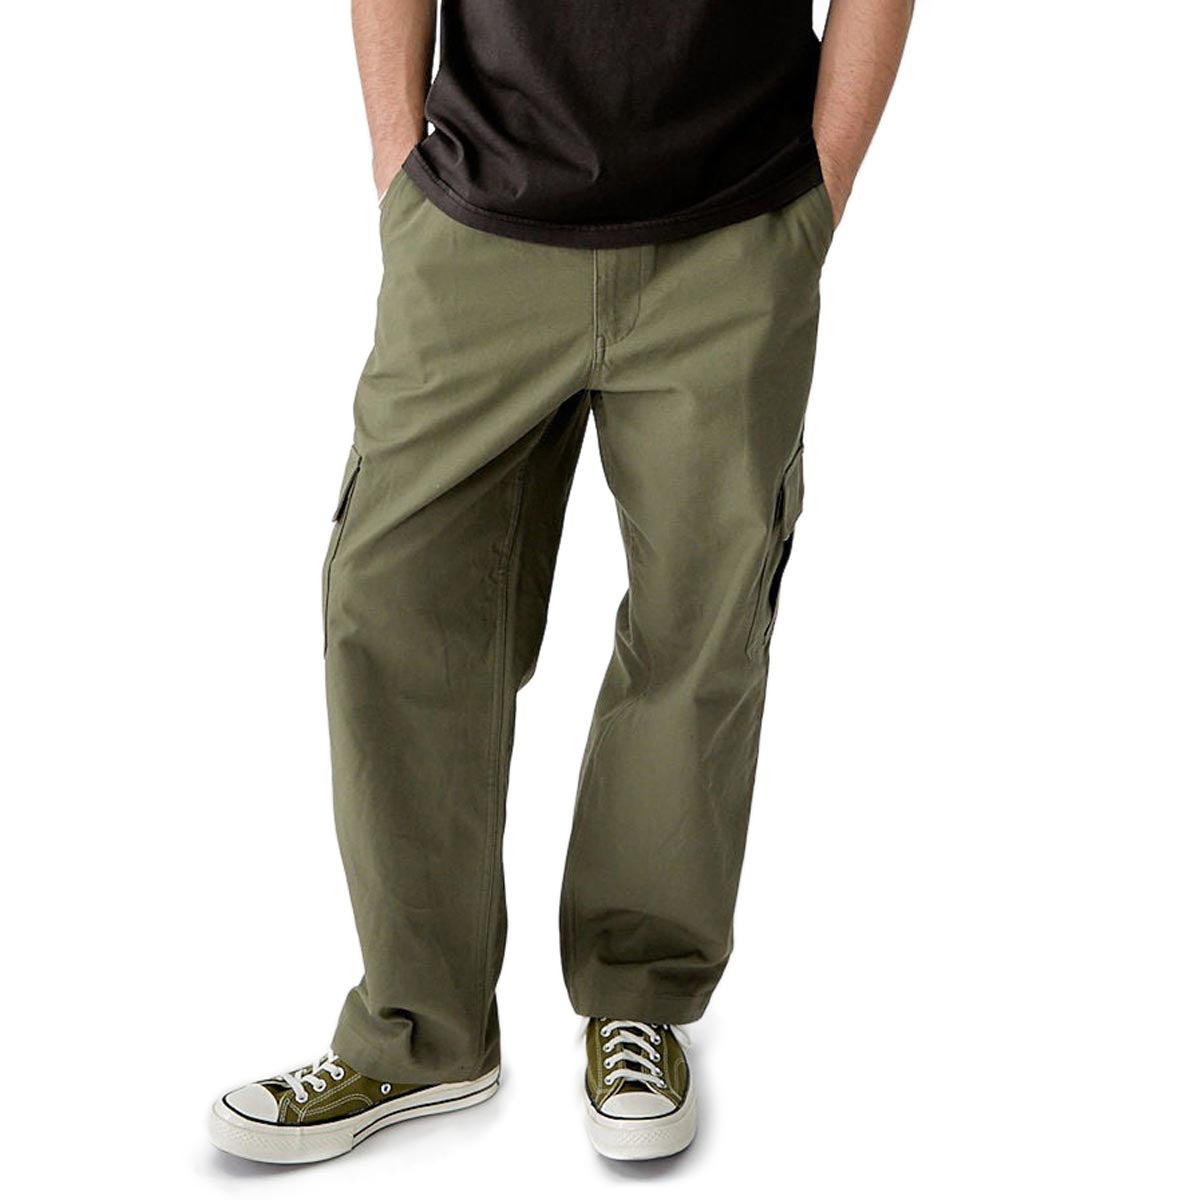 Rhythm Combat Trouser Pants - Olive image 1